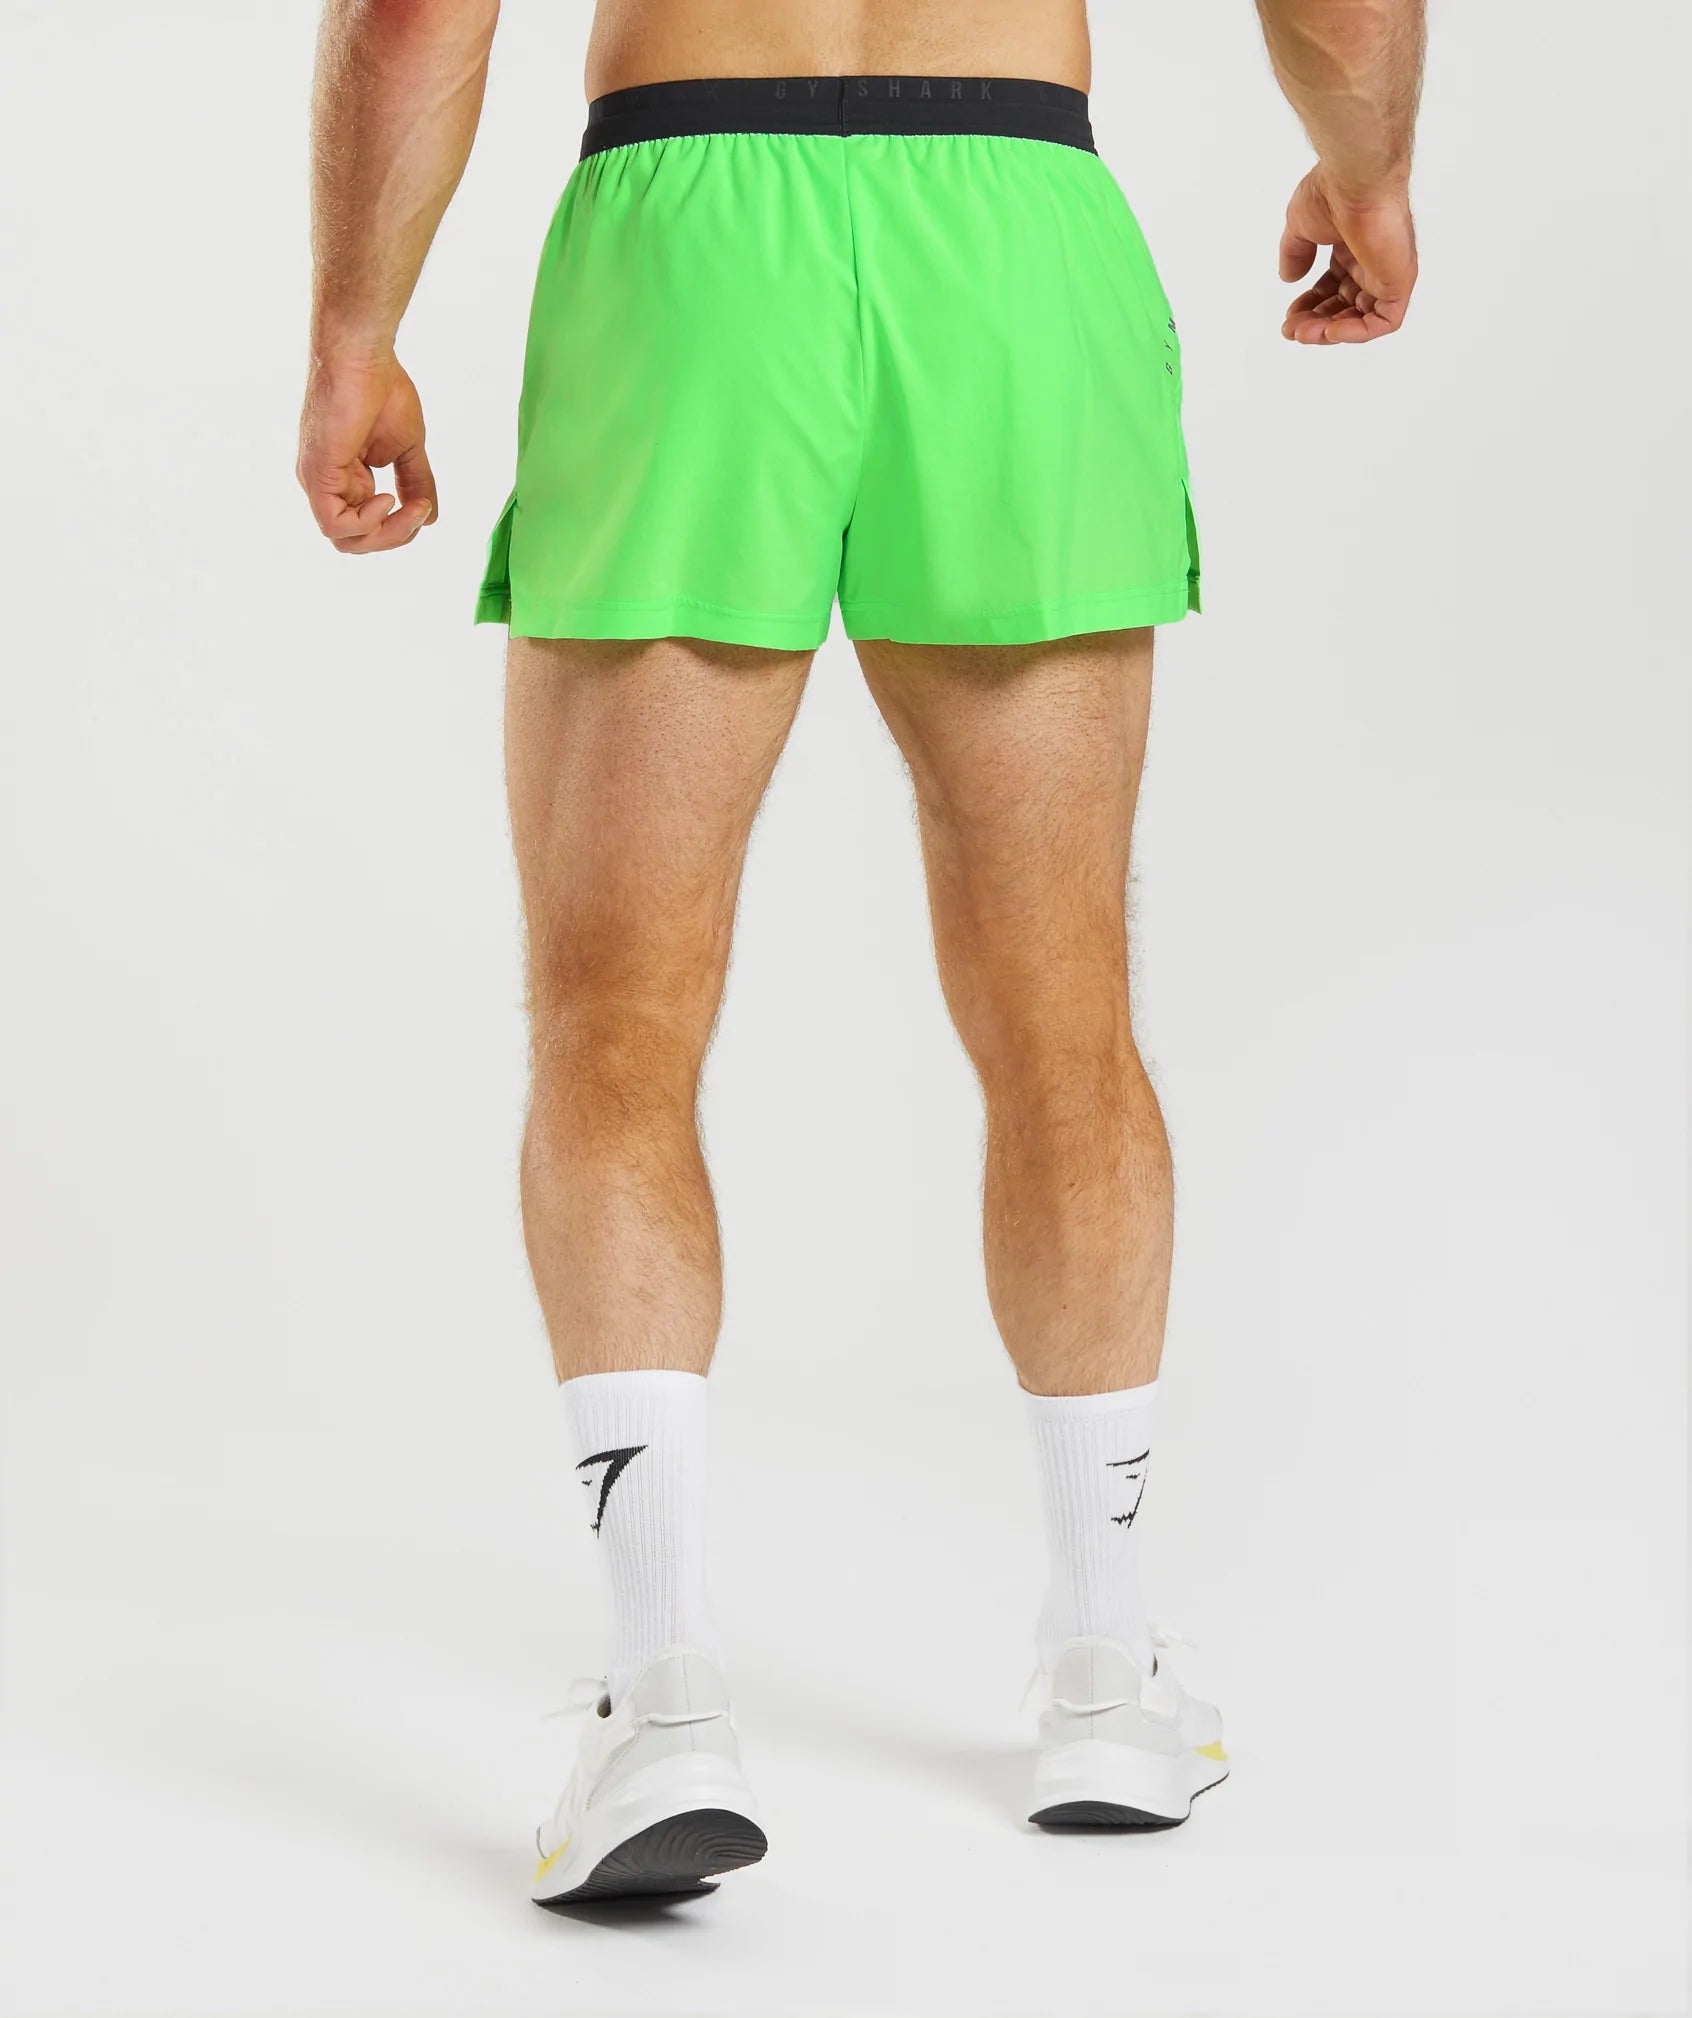 Gymshark Neon Green Lightweight Athletic Shorts Size Medium (W26×L7)